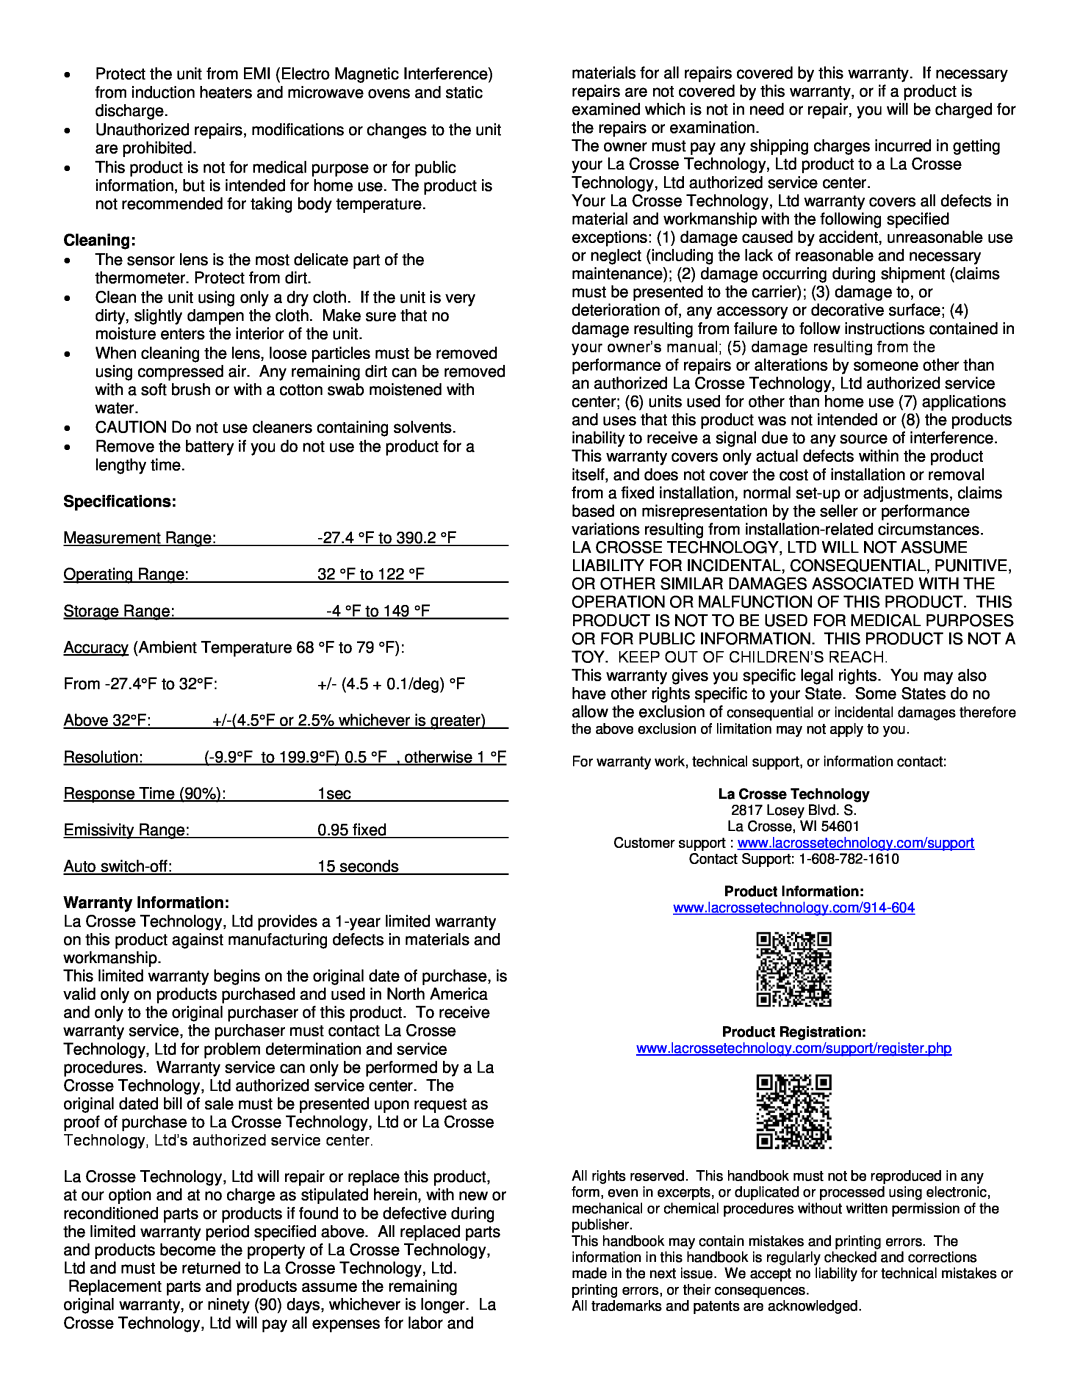 La Crosse Technology 914-604 manual Cleaning, Specifications, Warranty Information 